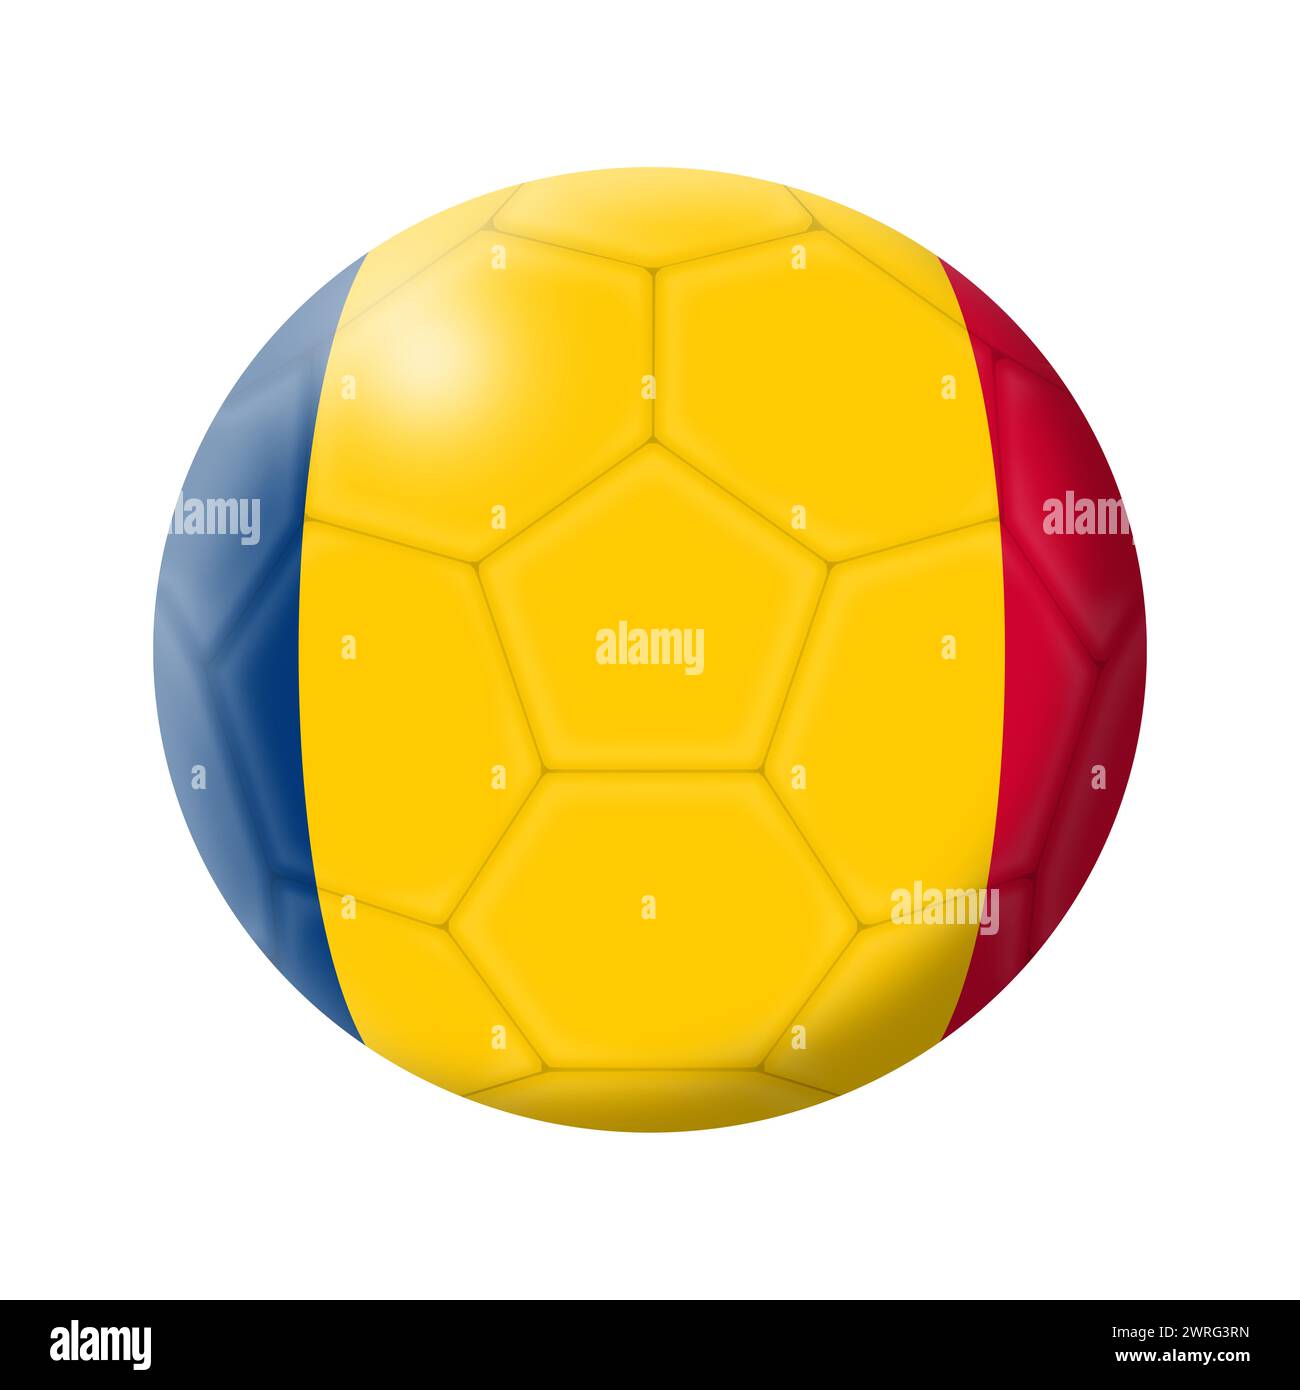 Chad soccer ball football illustration Stock Photo